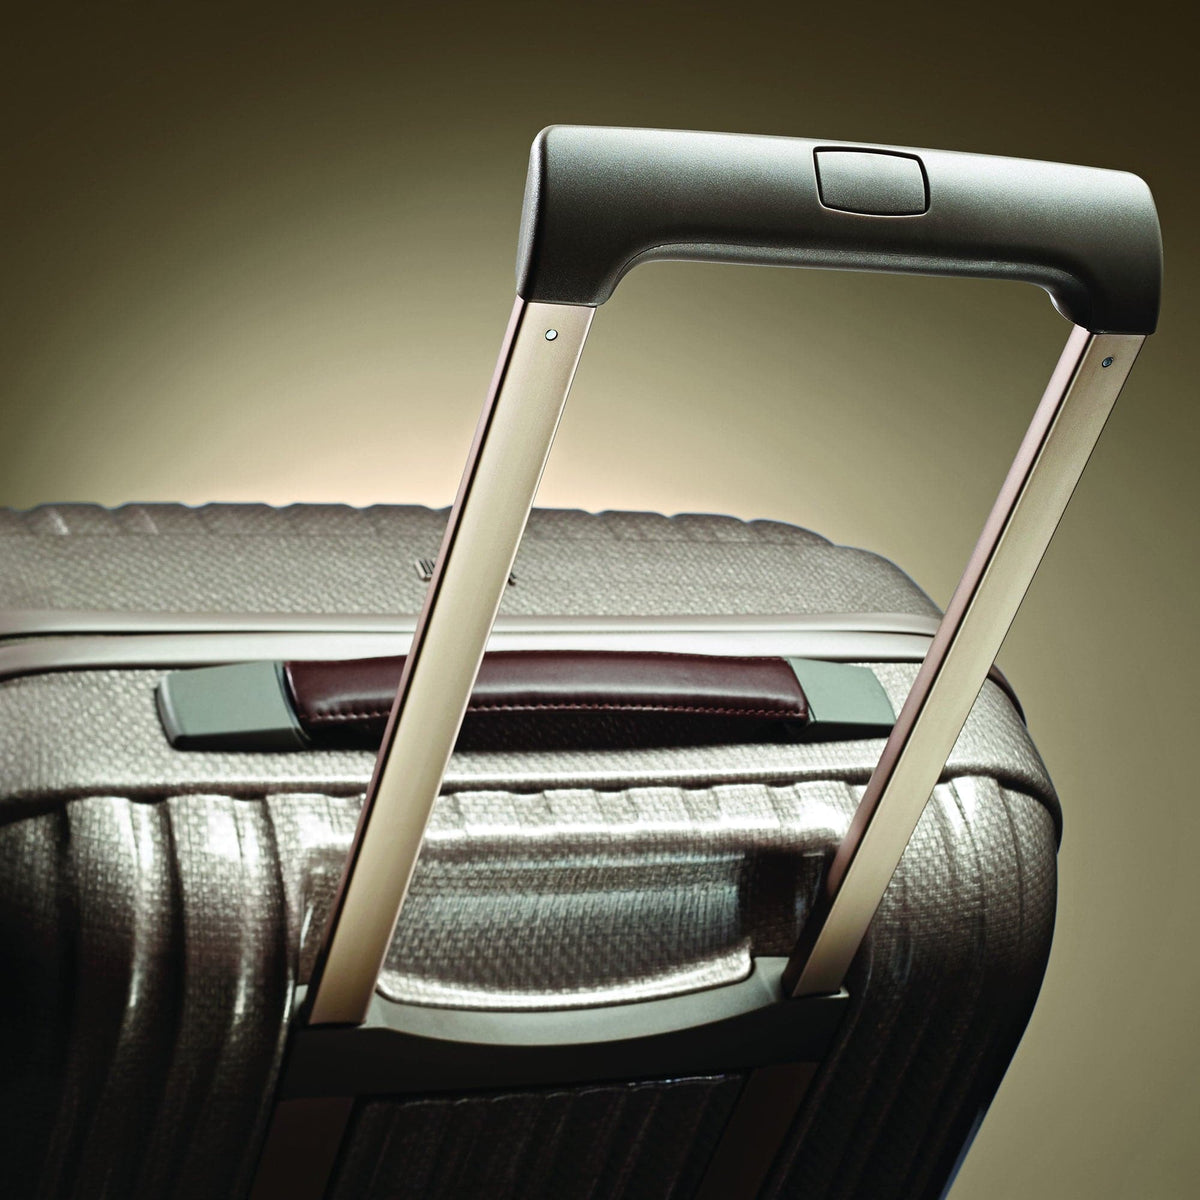 Hartmann Innovaire Global Carry-On Spinner Luggage